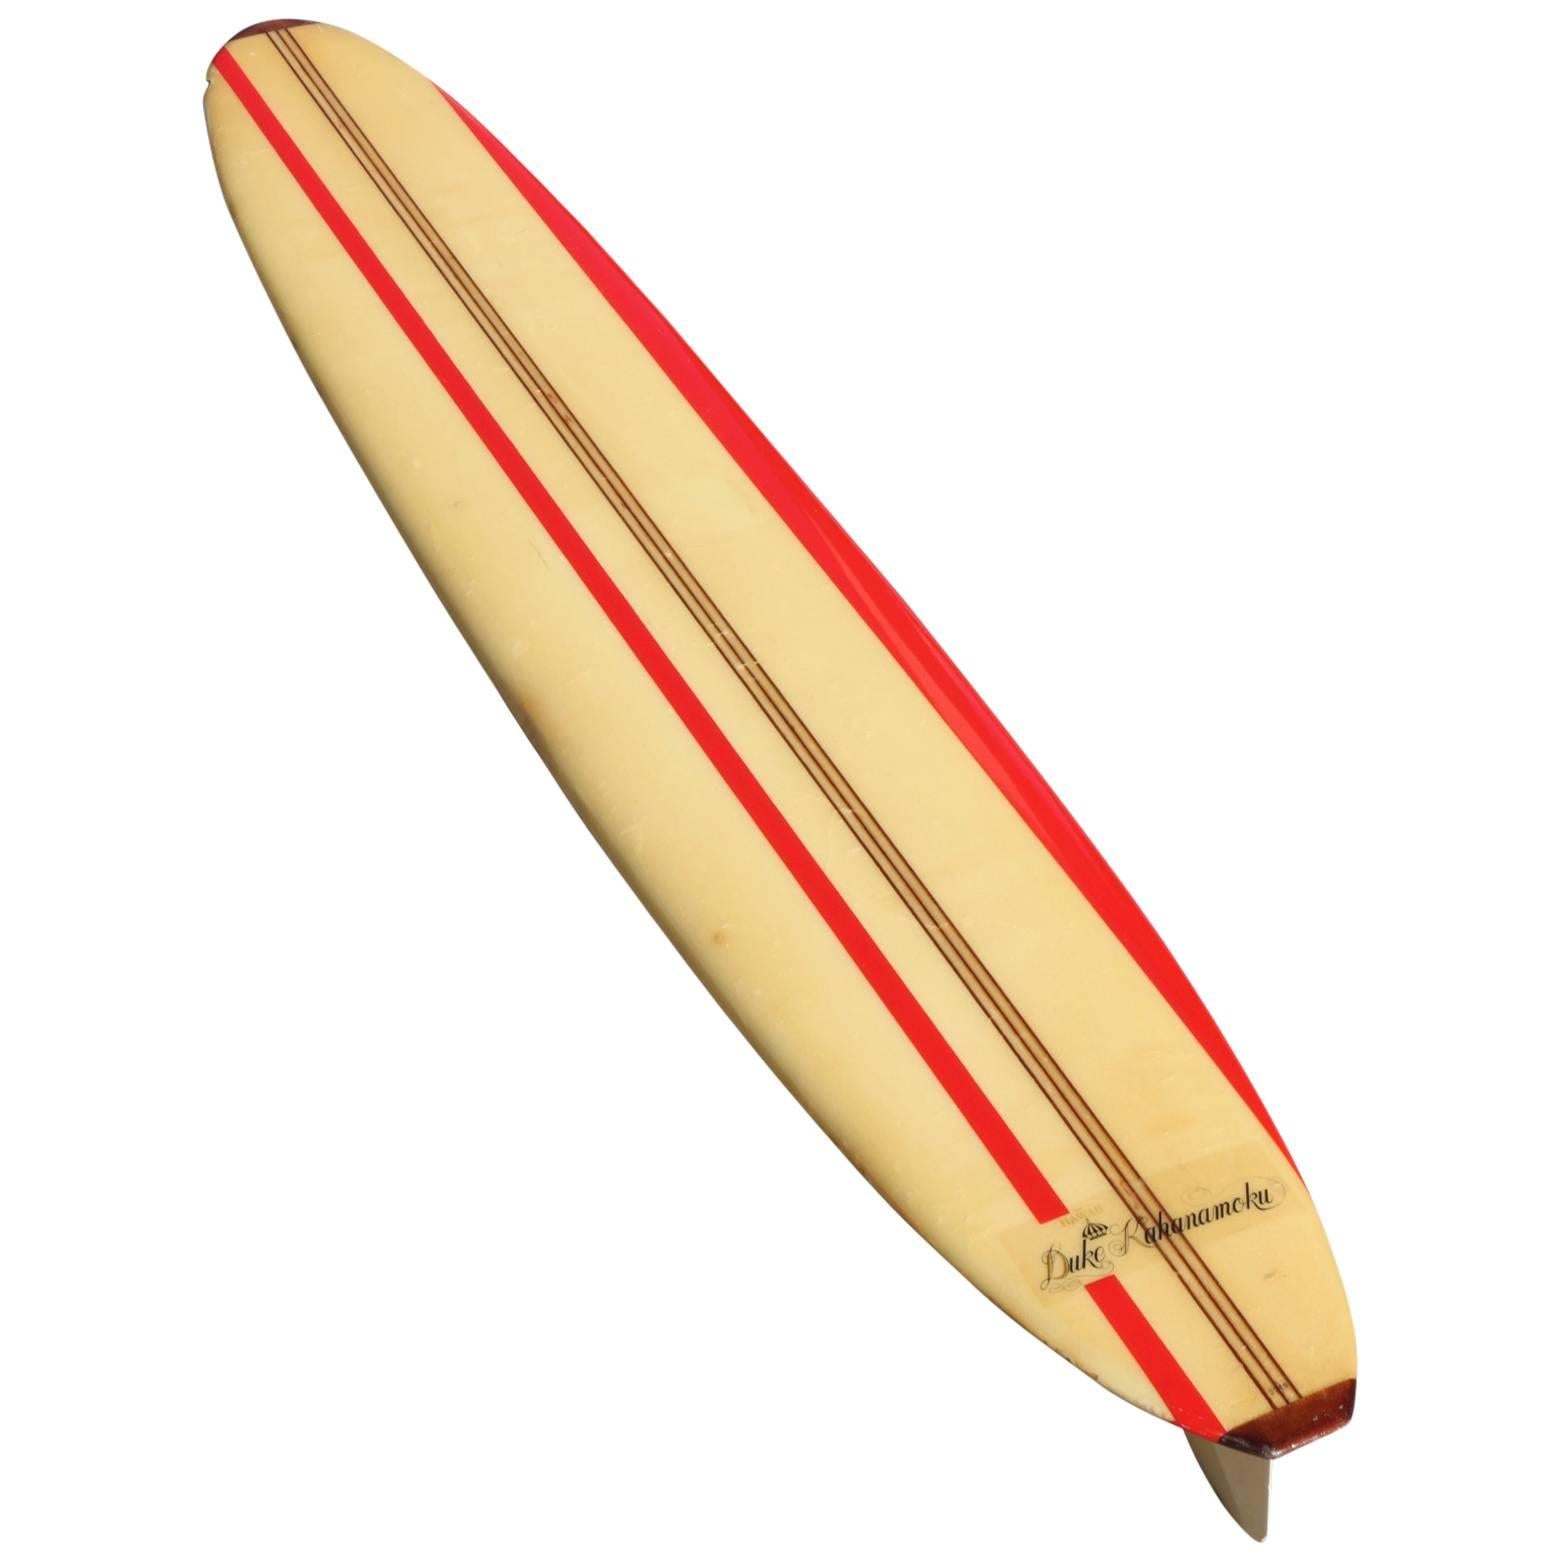 Original Duke Kahanamoku Longboard Surfboard with Red Stripes circa 1965  